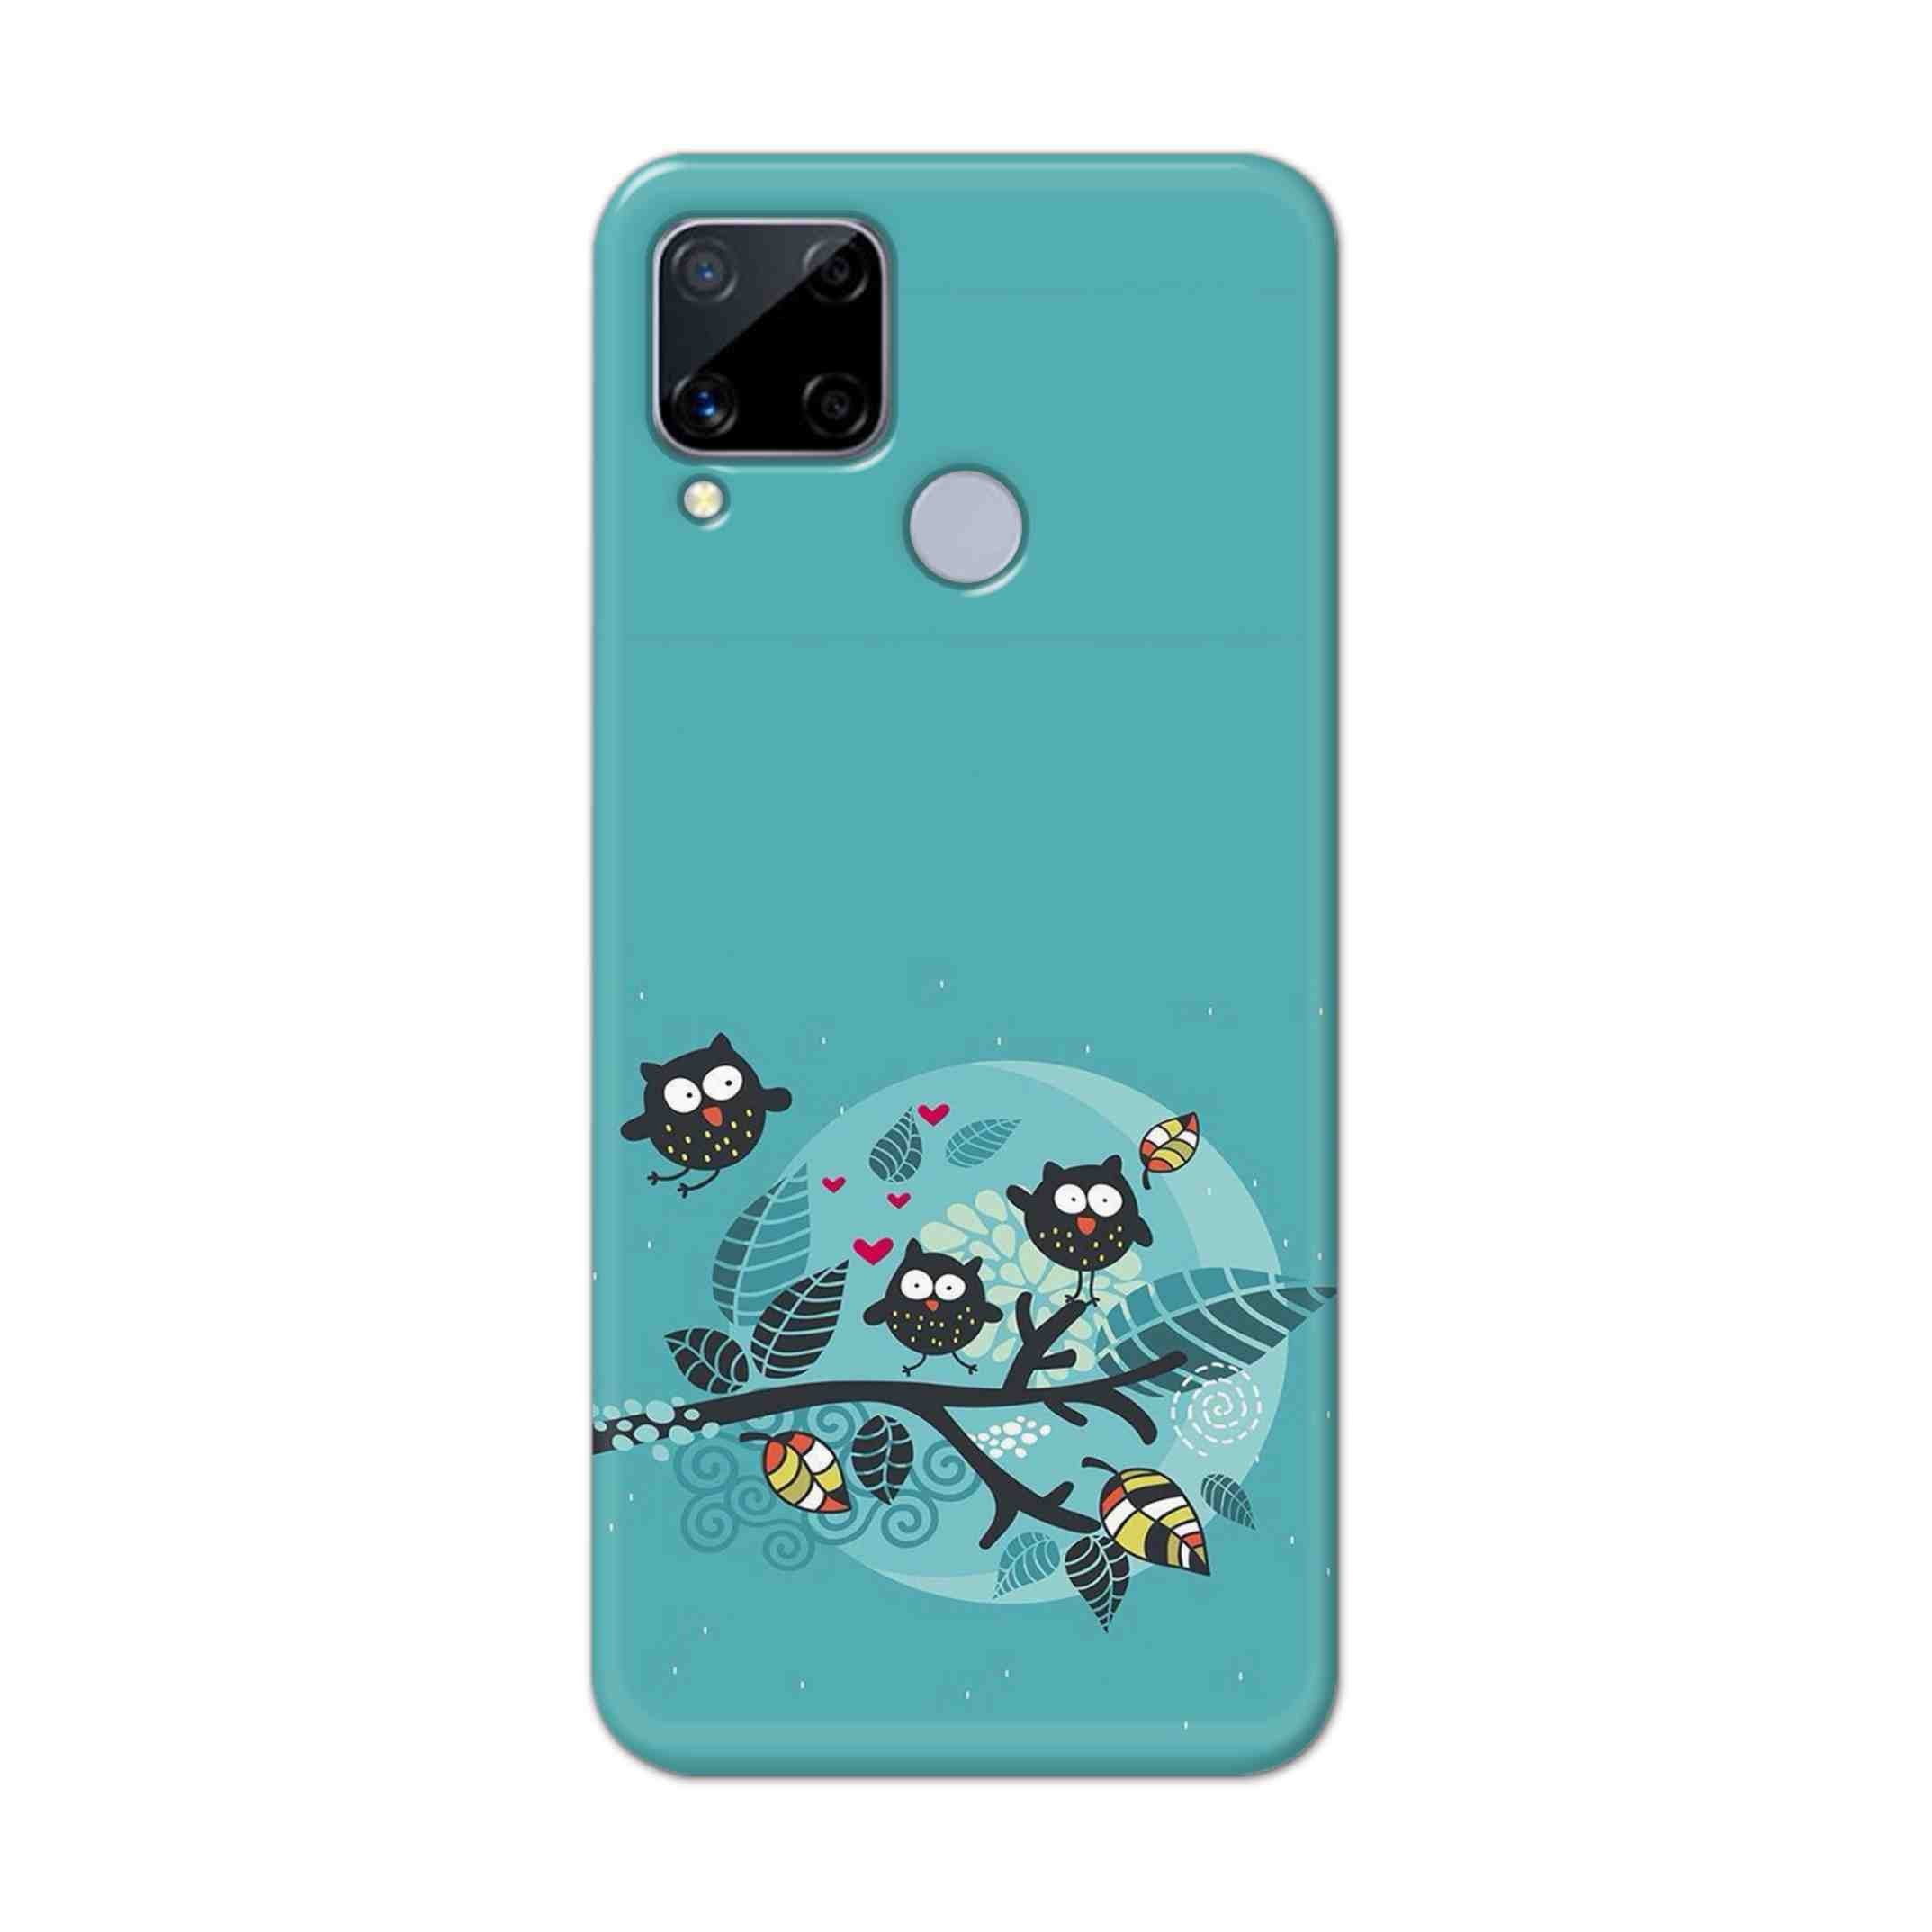 Buy Owl Hard Back Mobile Phone Case Cover For Realme C15 Online